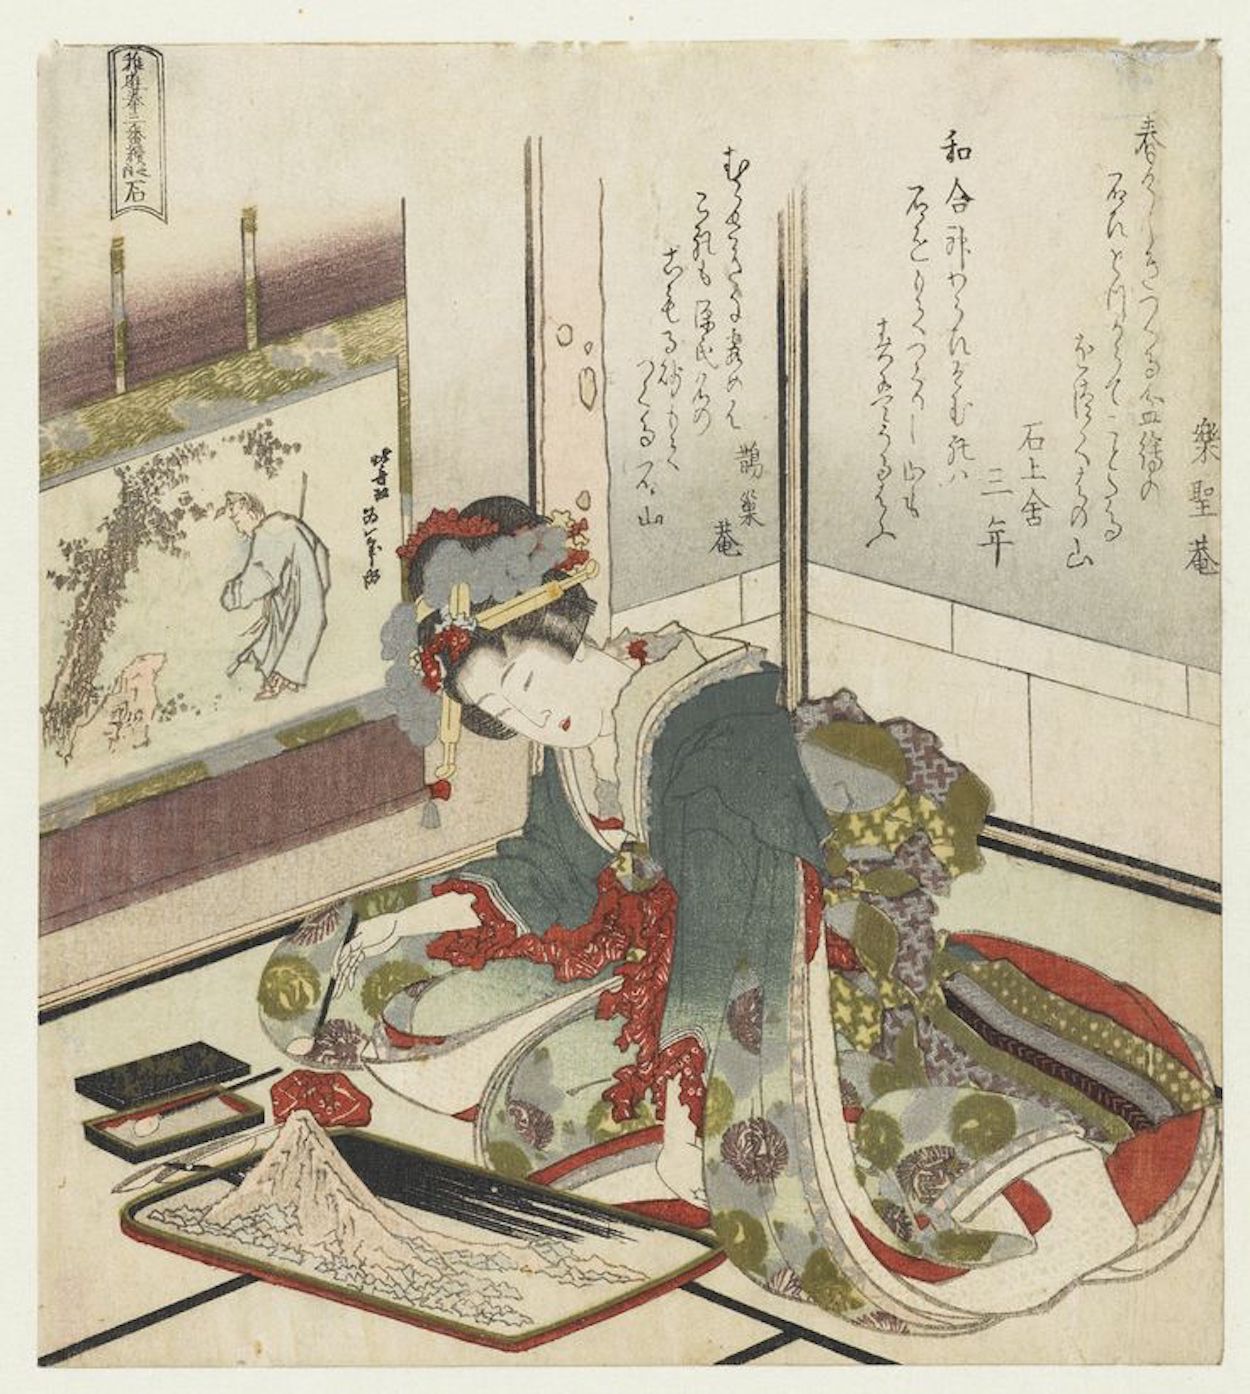 Piedra by Katsushika Hokusai - 1823 Colección privada